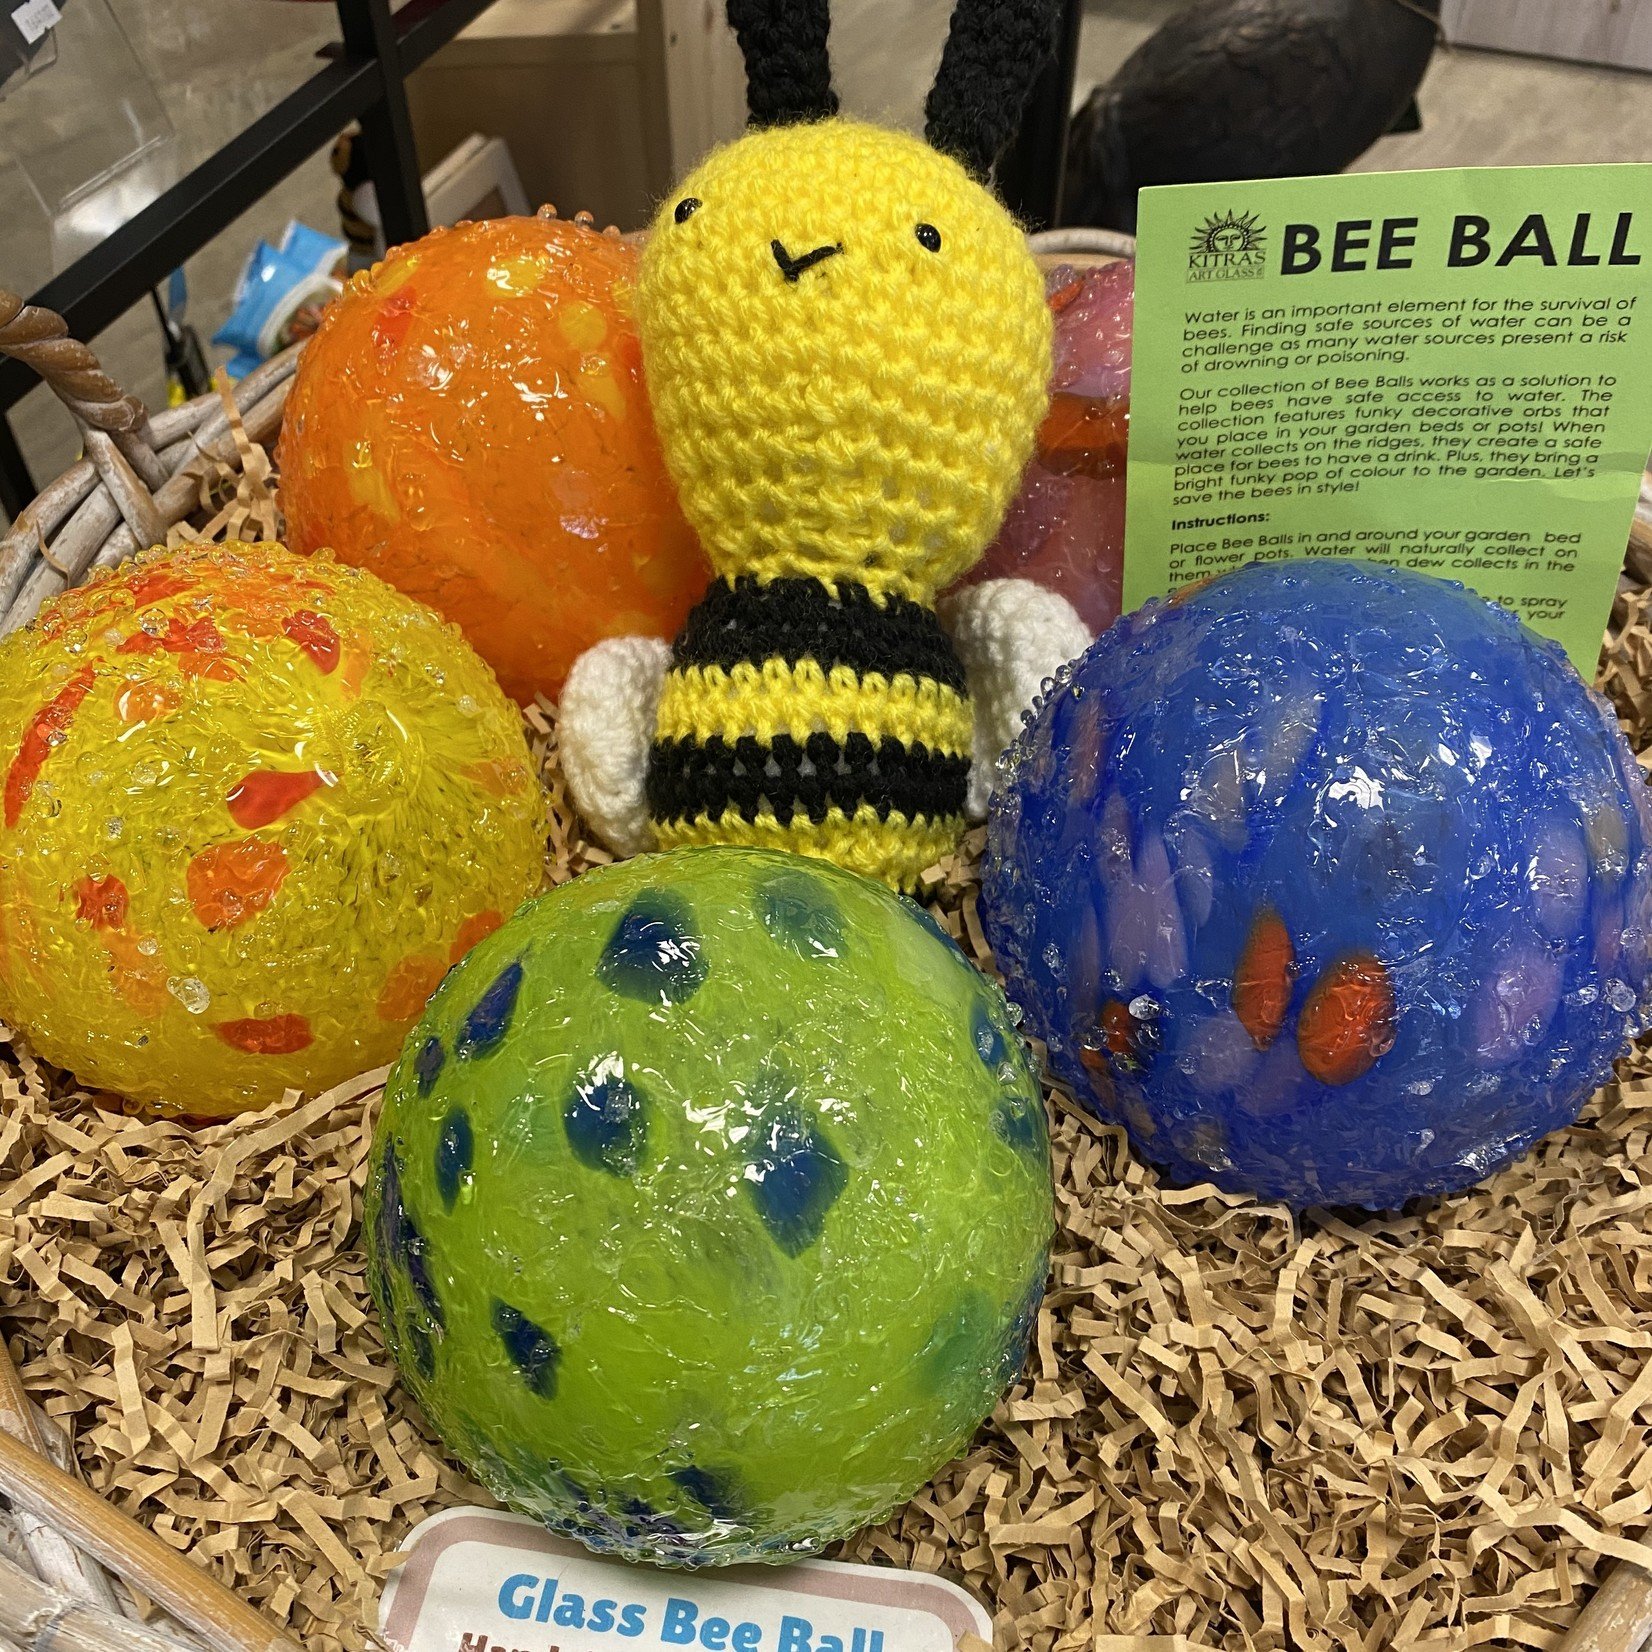 Glass Bee Ball